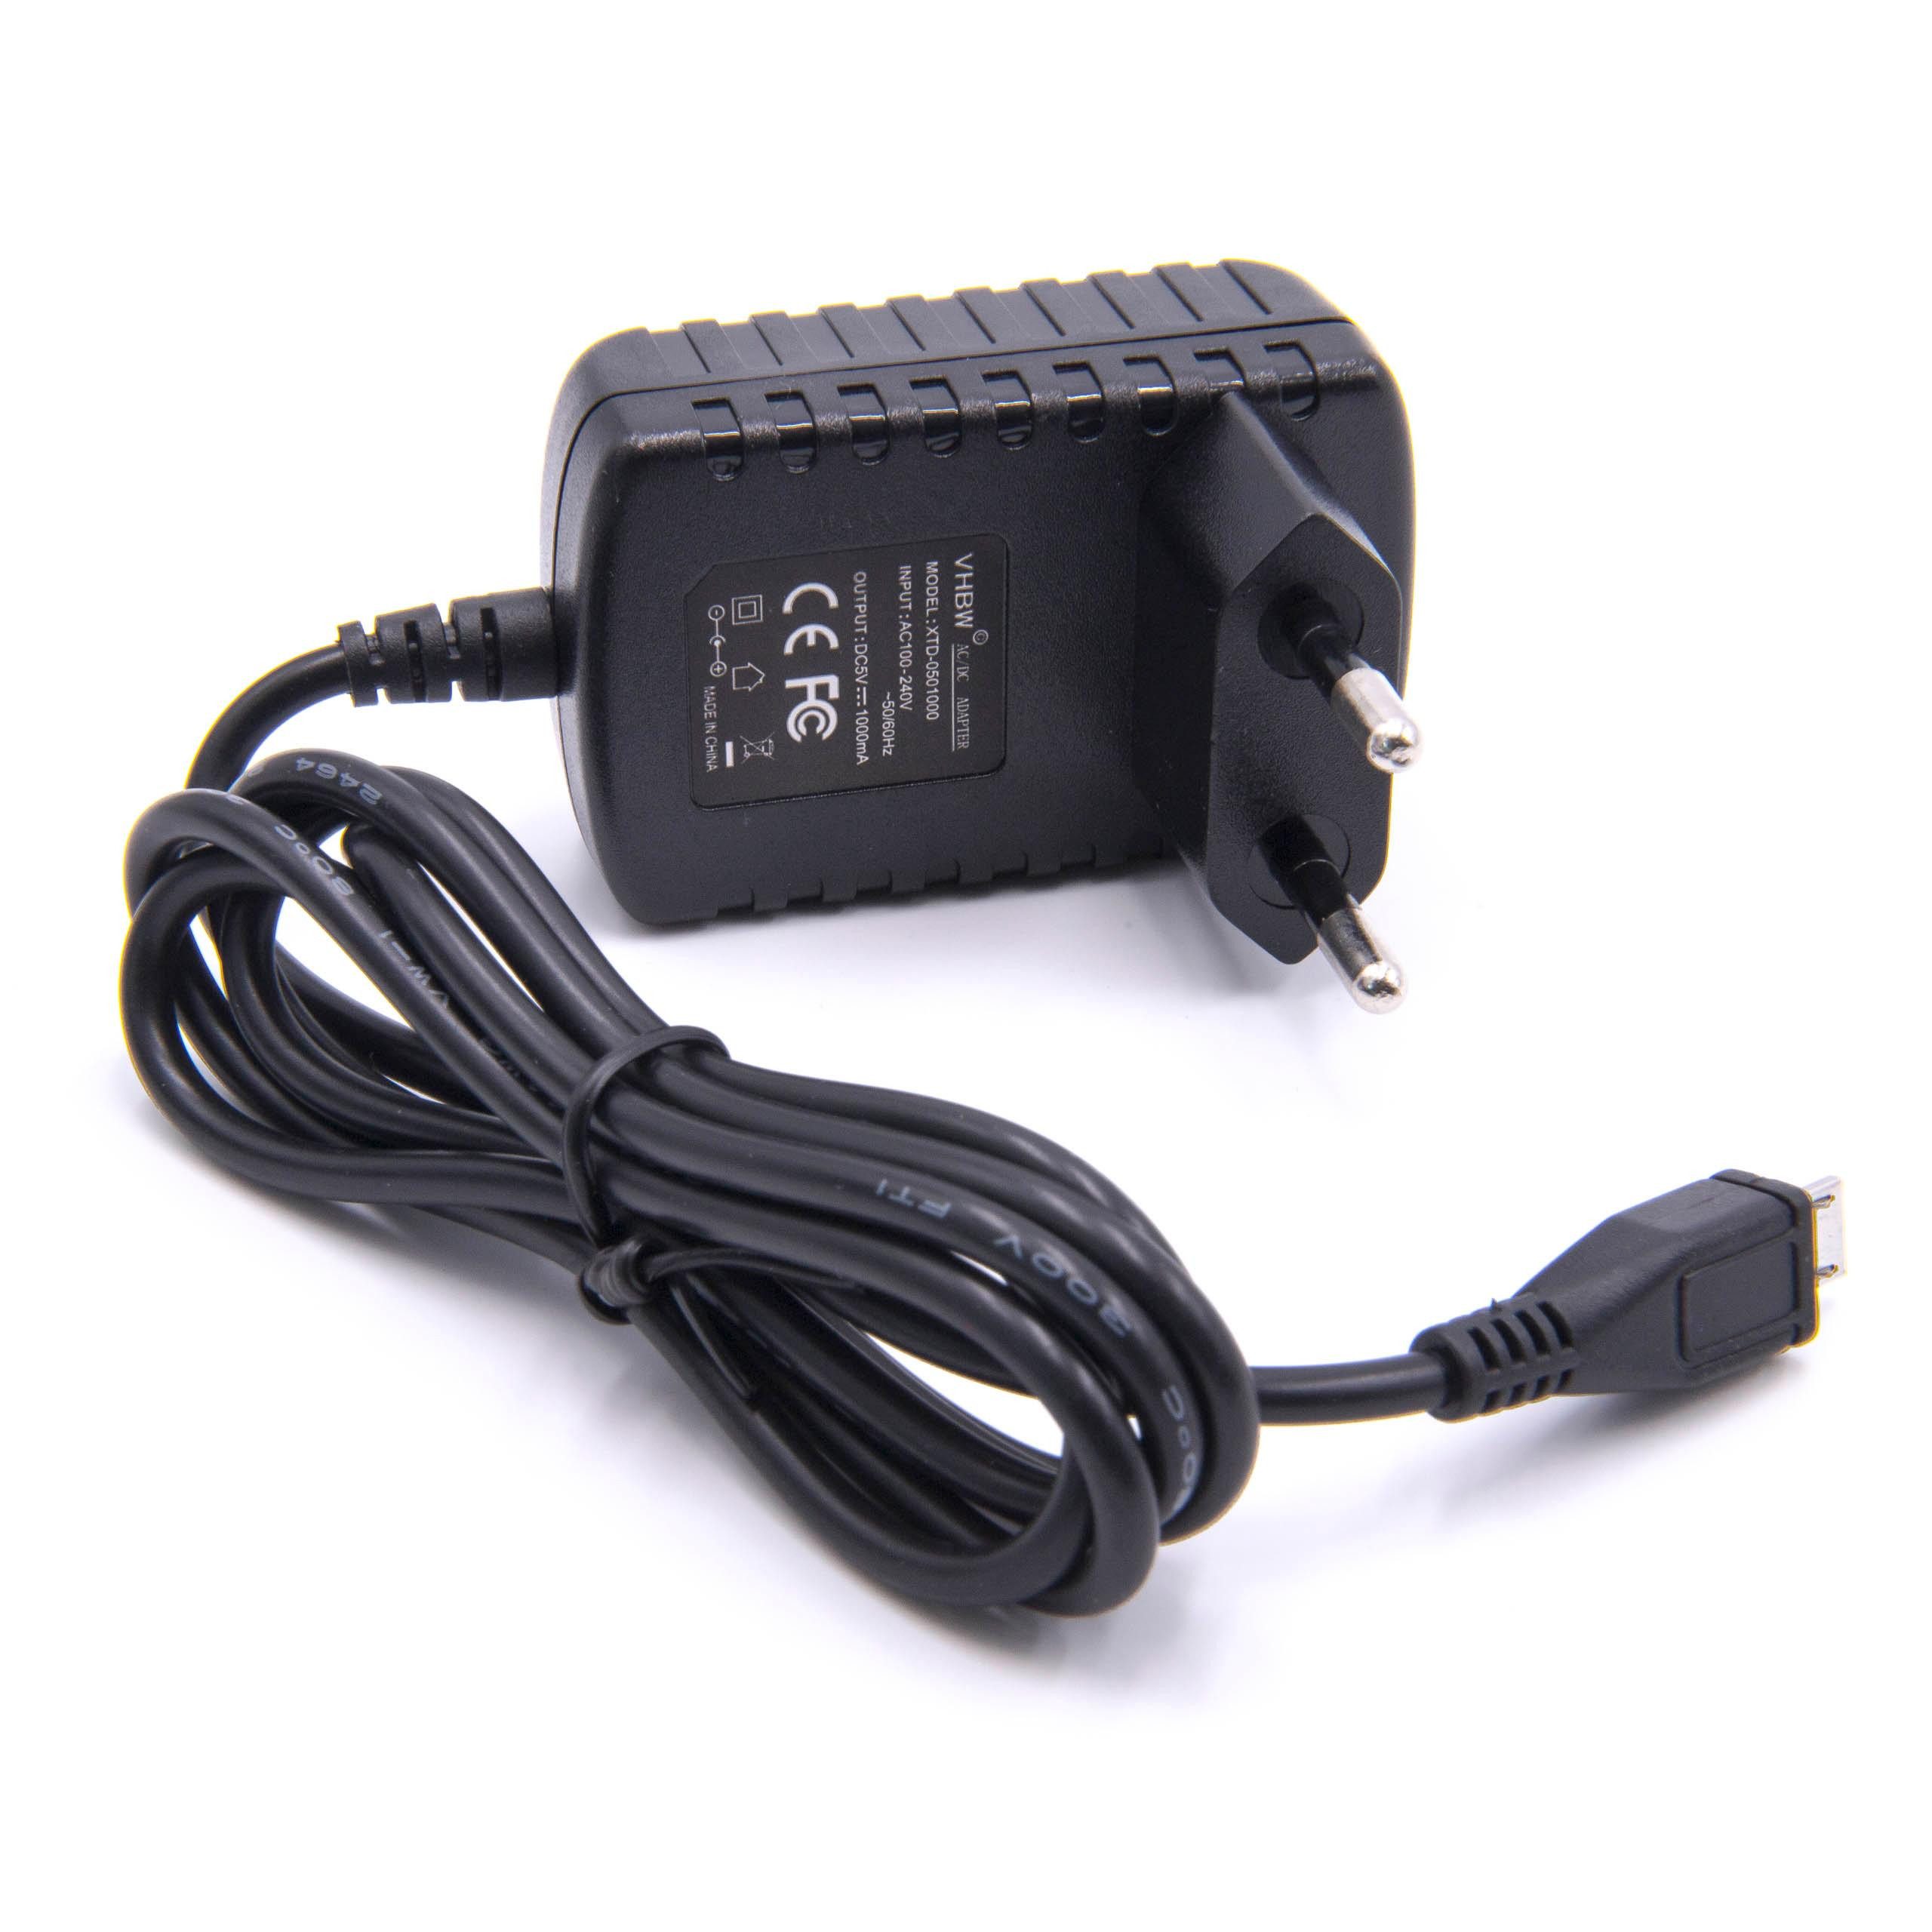 vhbw passend für Philips Avent SCD833/26, SCD630, SCD841/26, SCD831/52, USB-Ladegerät